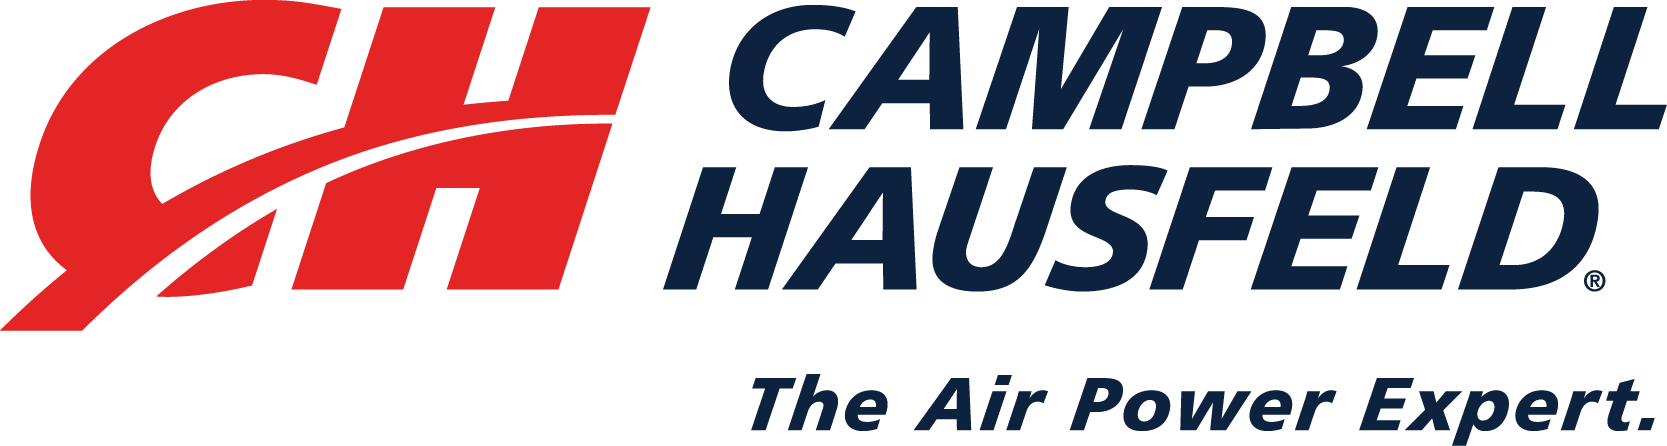 campbell hausfeld logo